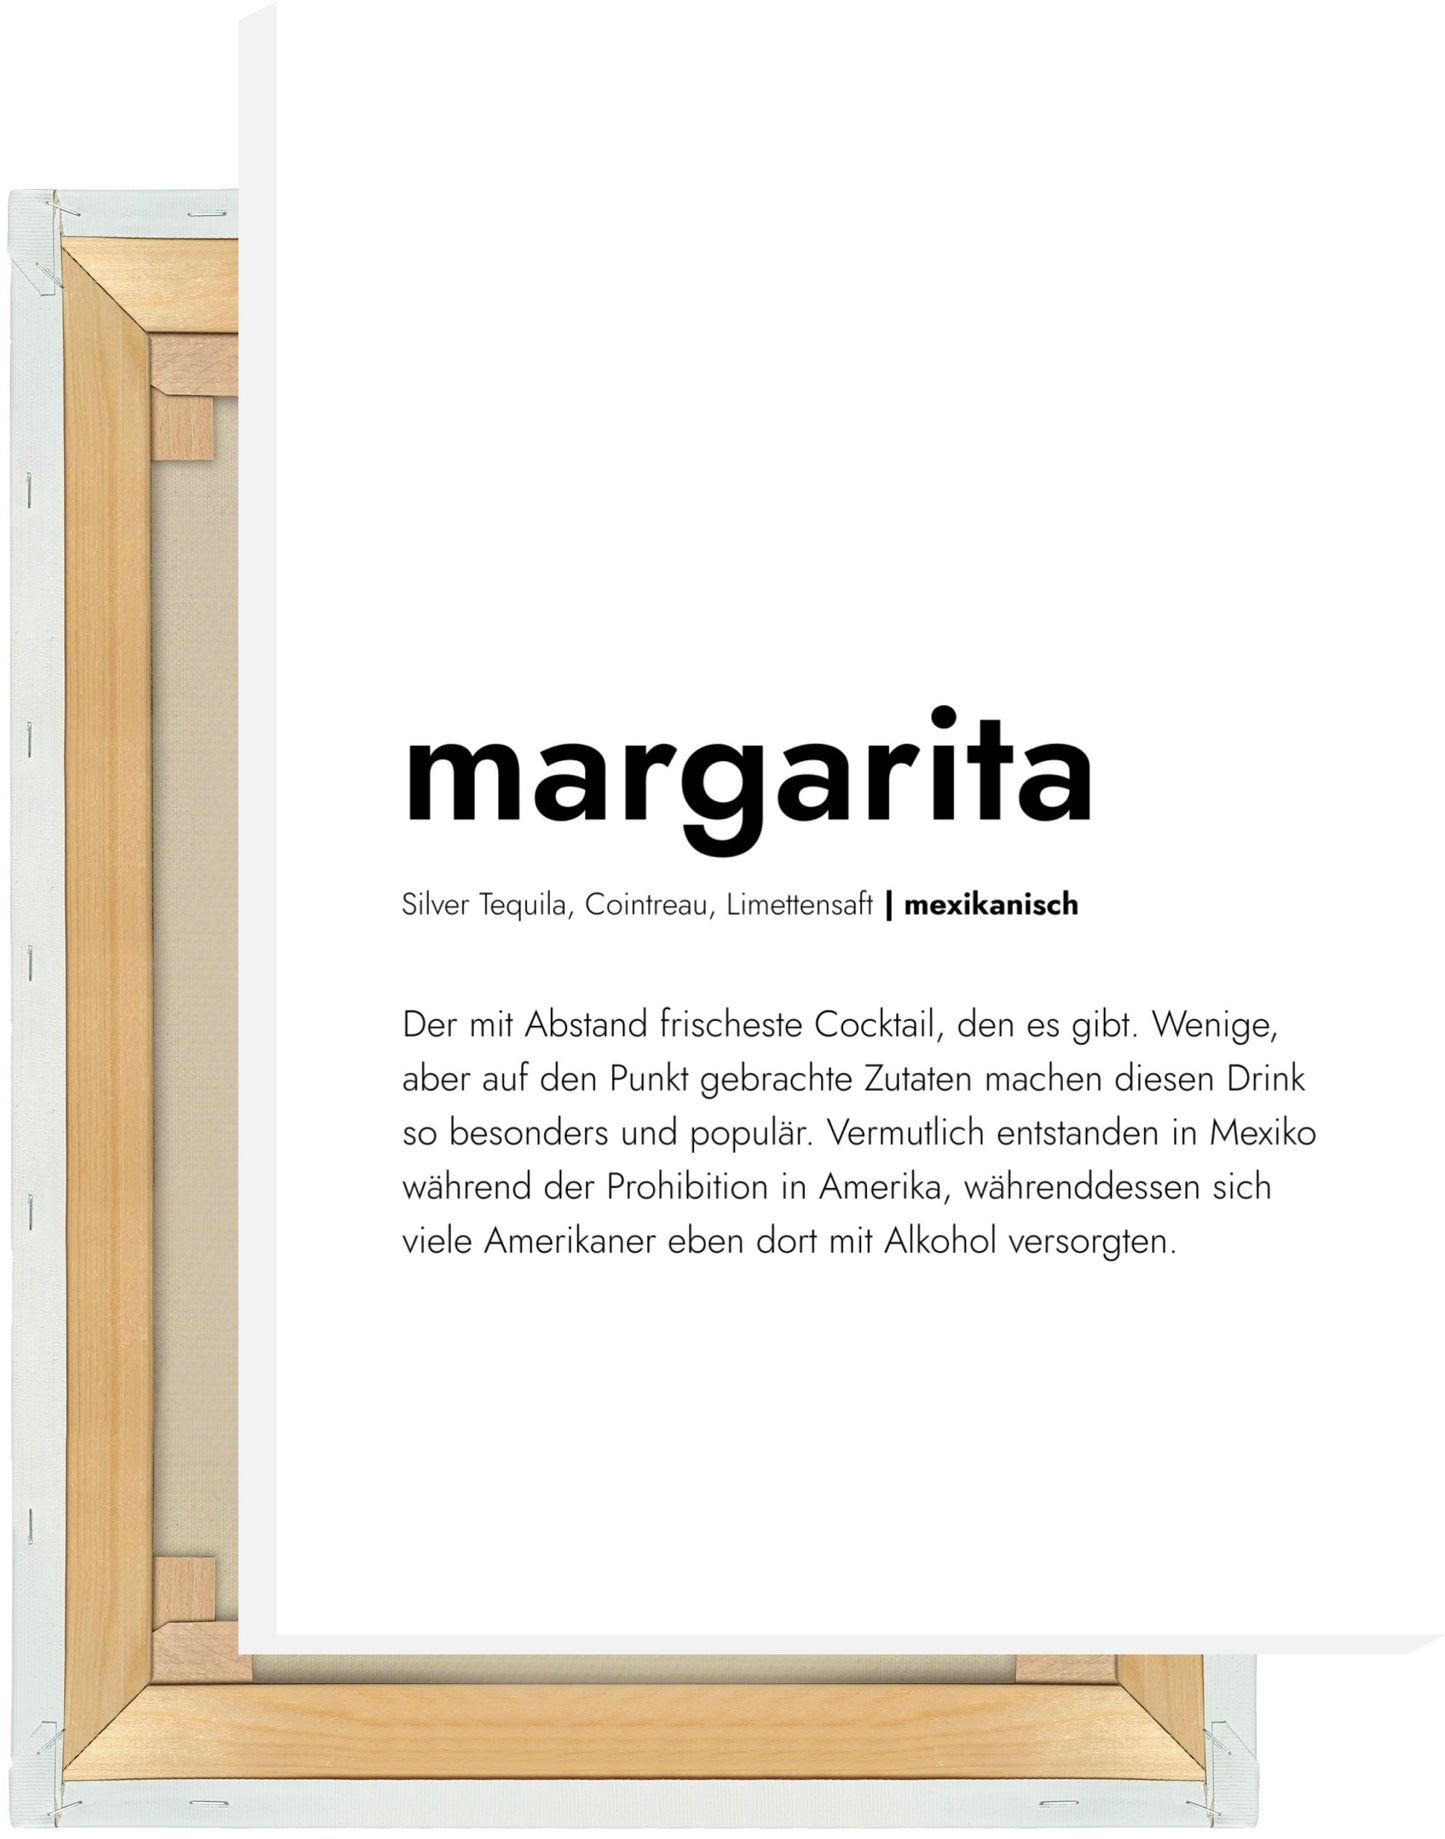 Leinwand Margarita - Definition